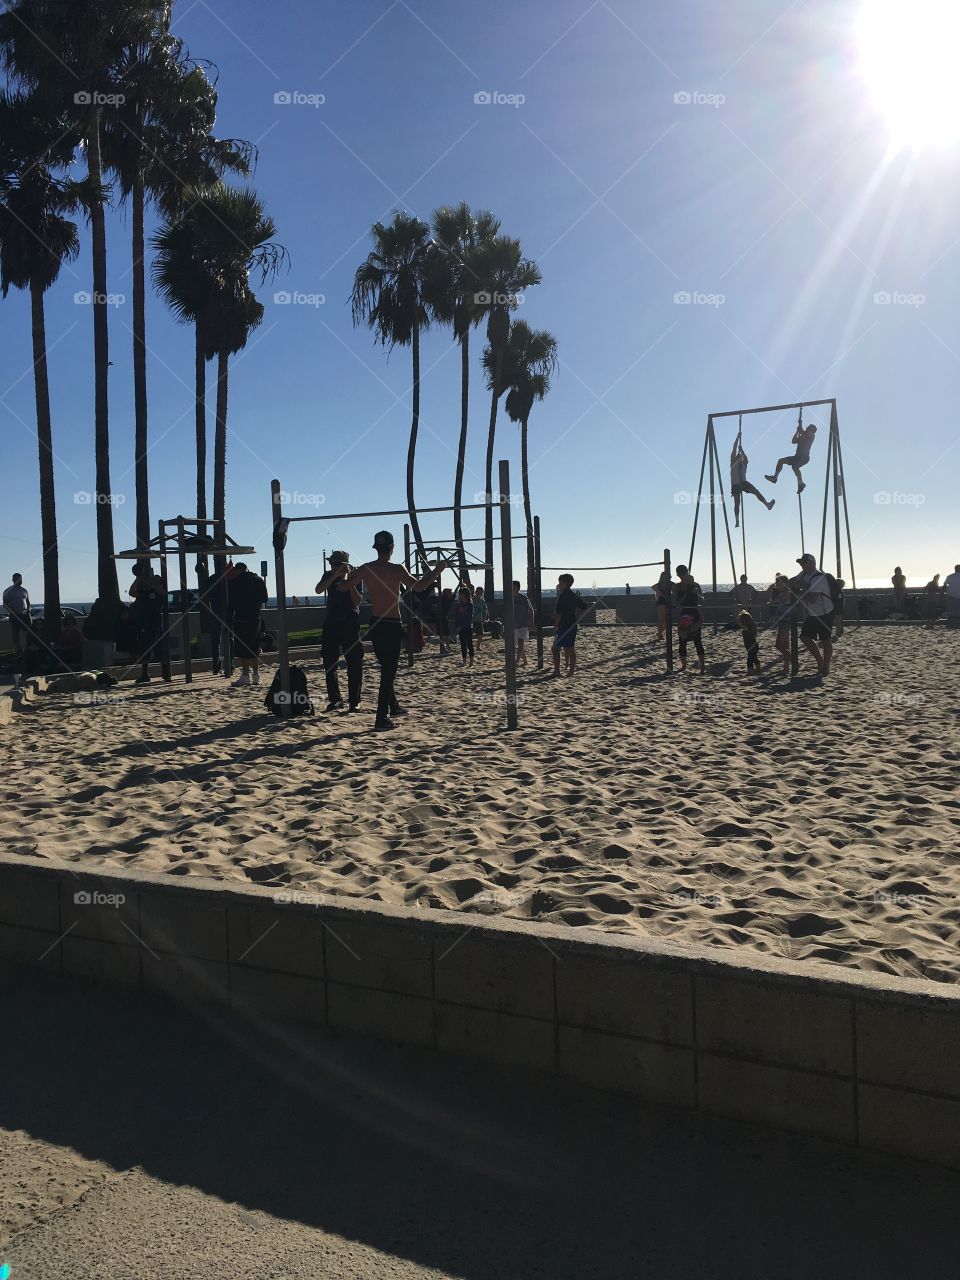 muscle working 
Venice beach CA USA